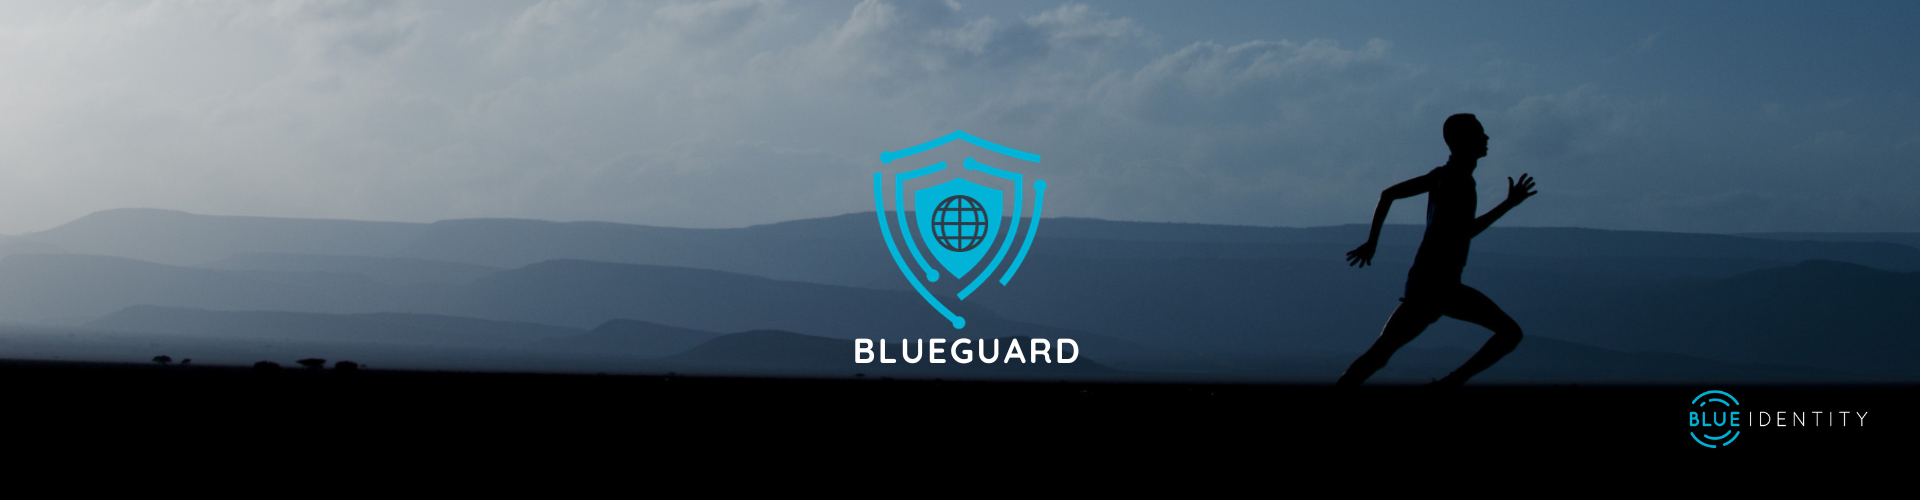 Blueguard-by-blueidentity